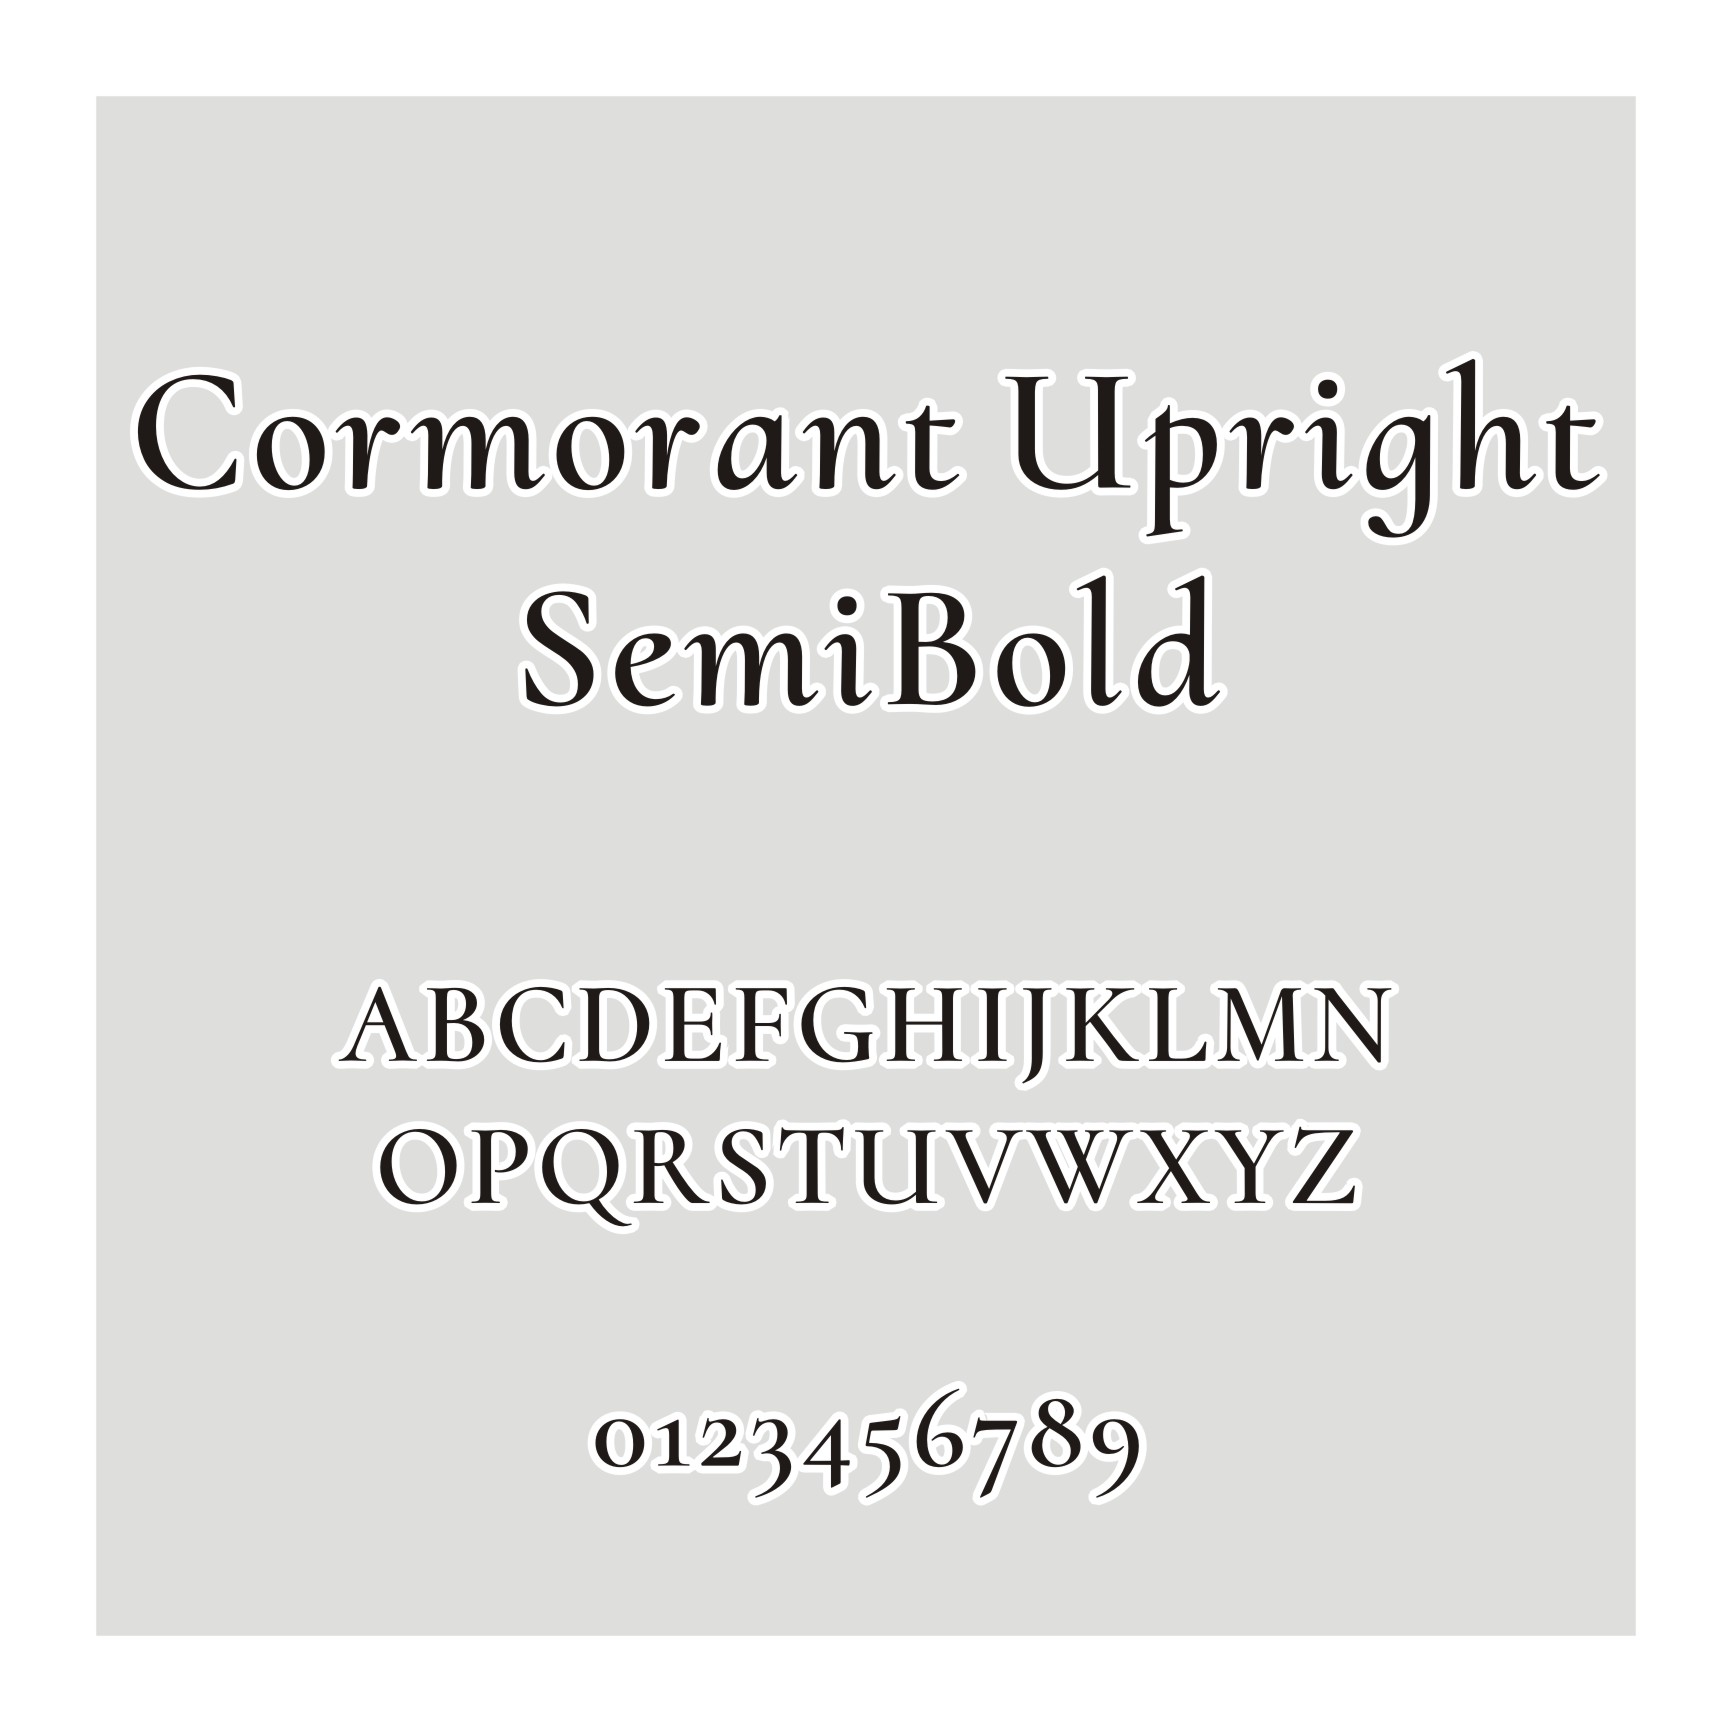 Cormorant Upright SemiBold